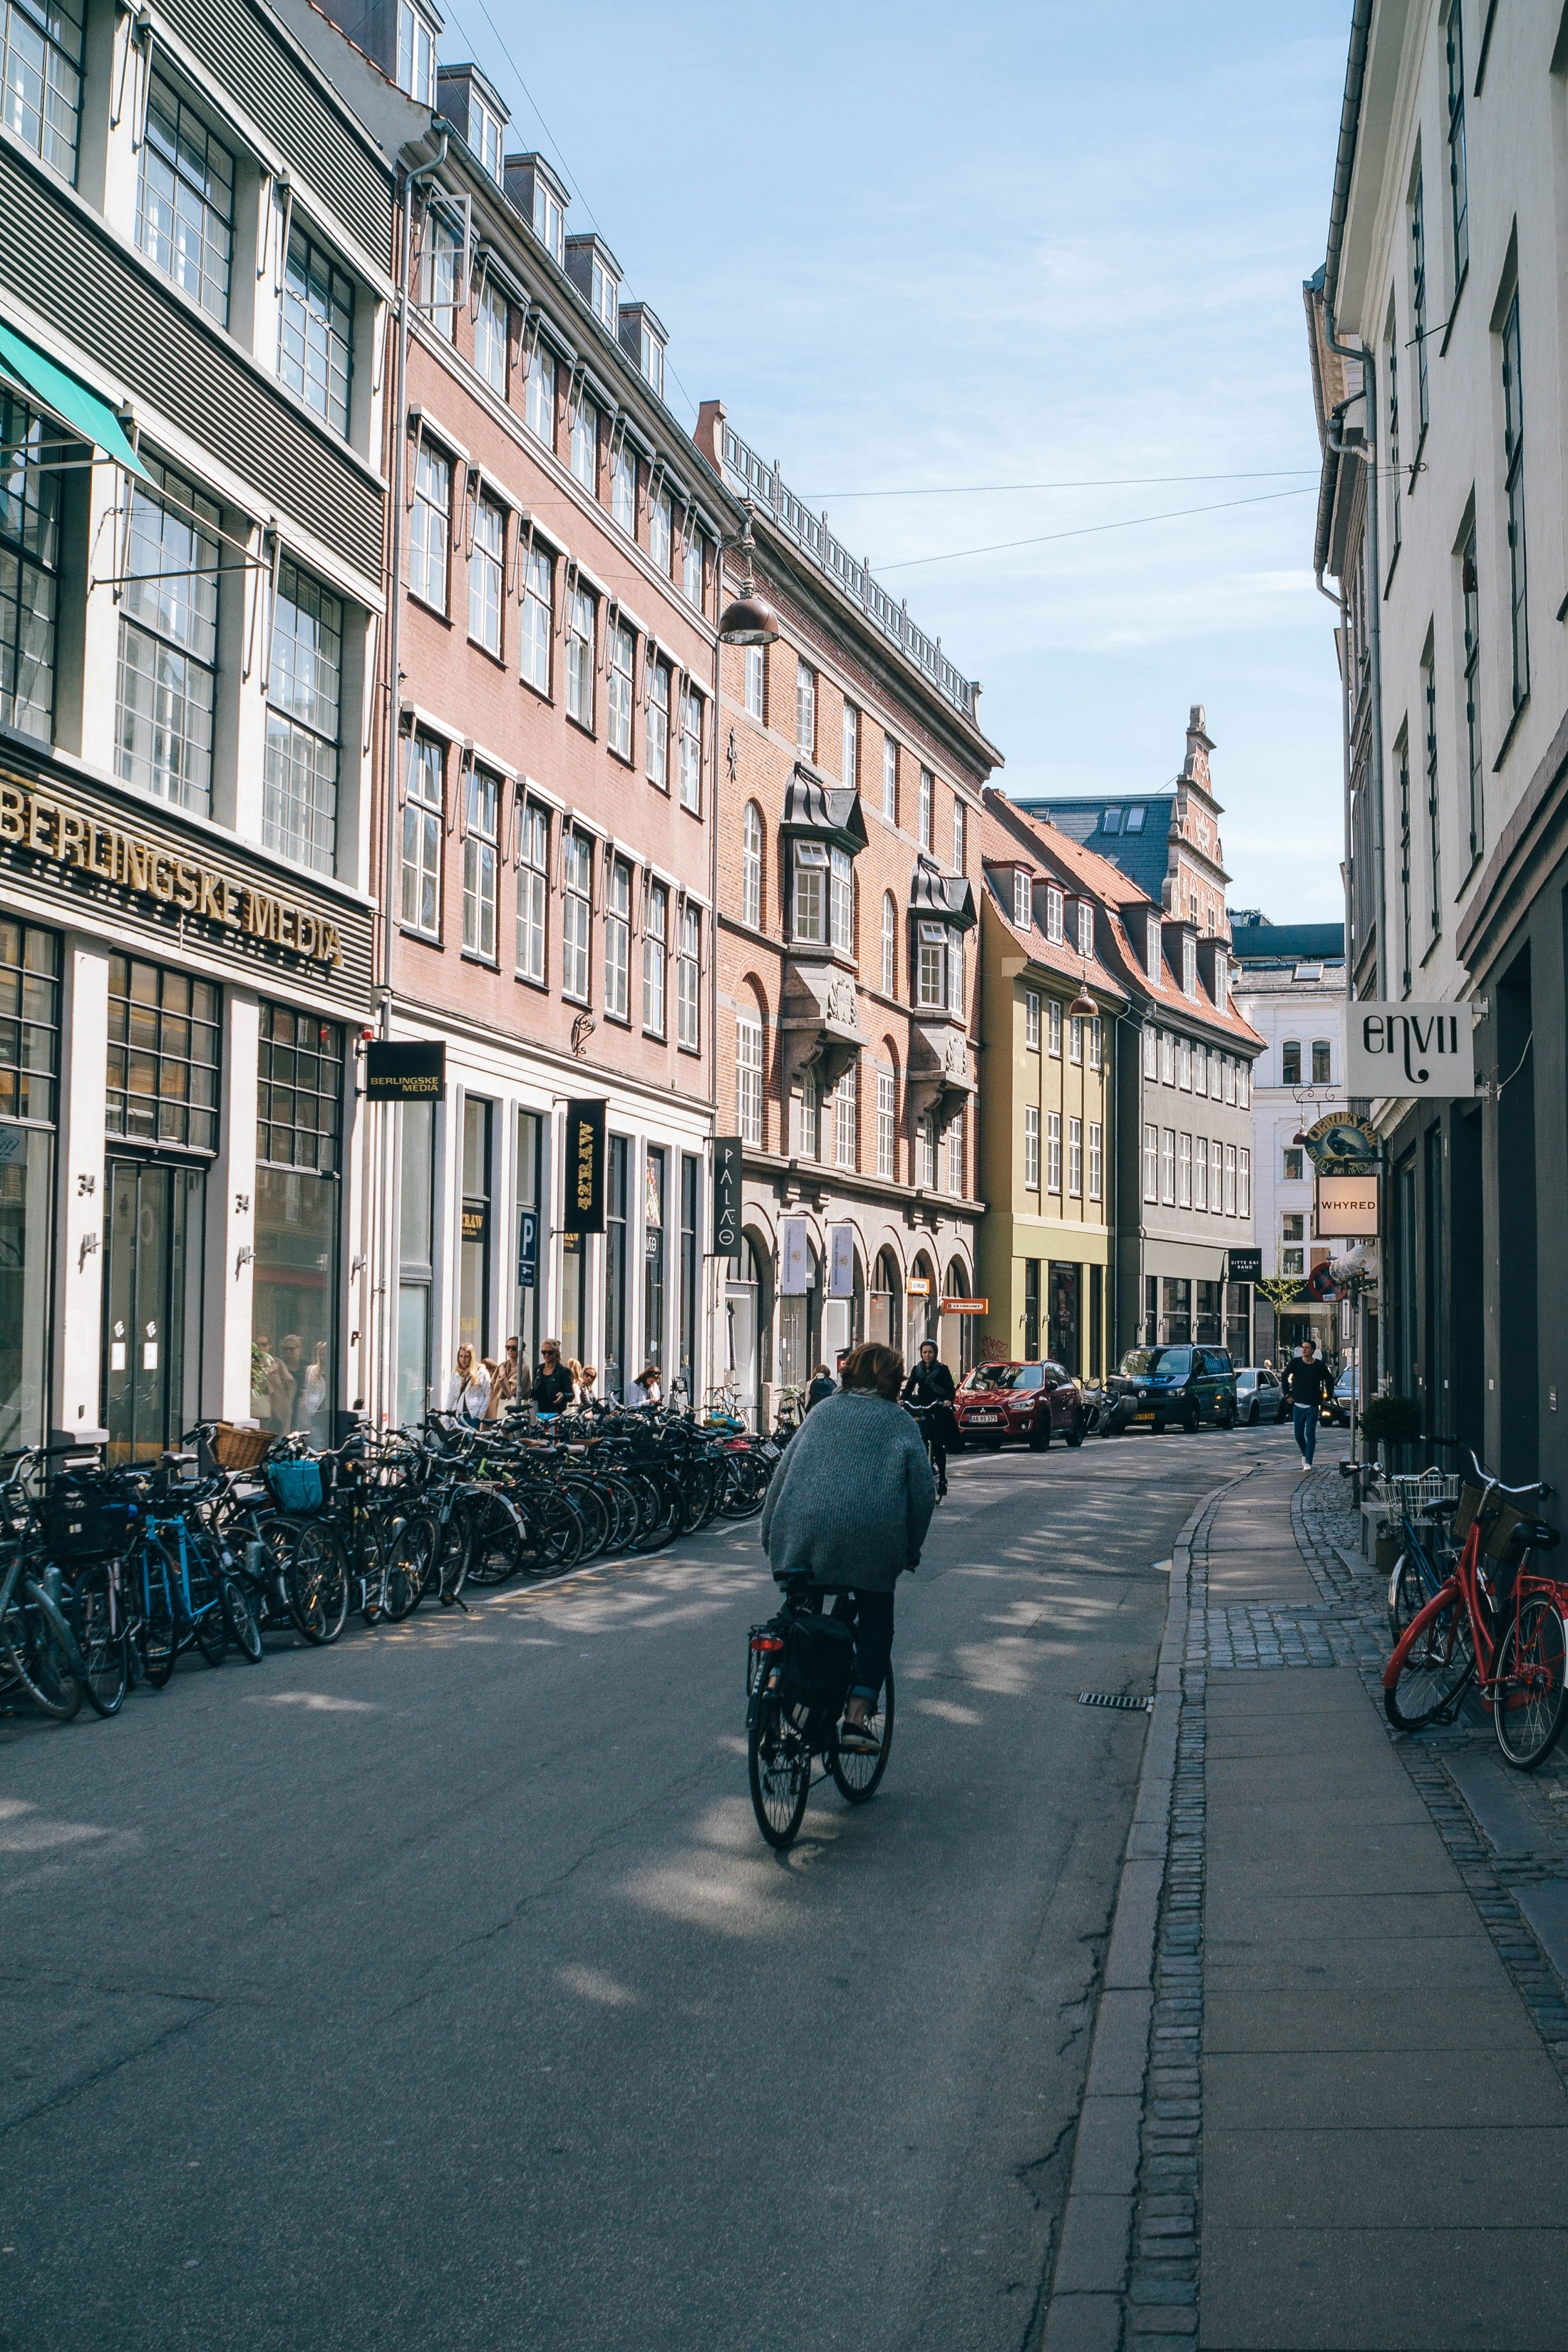 So many bikes in Copenhagen!